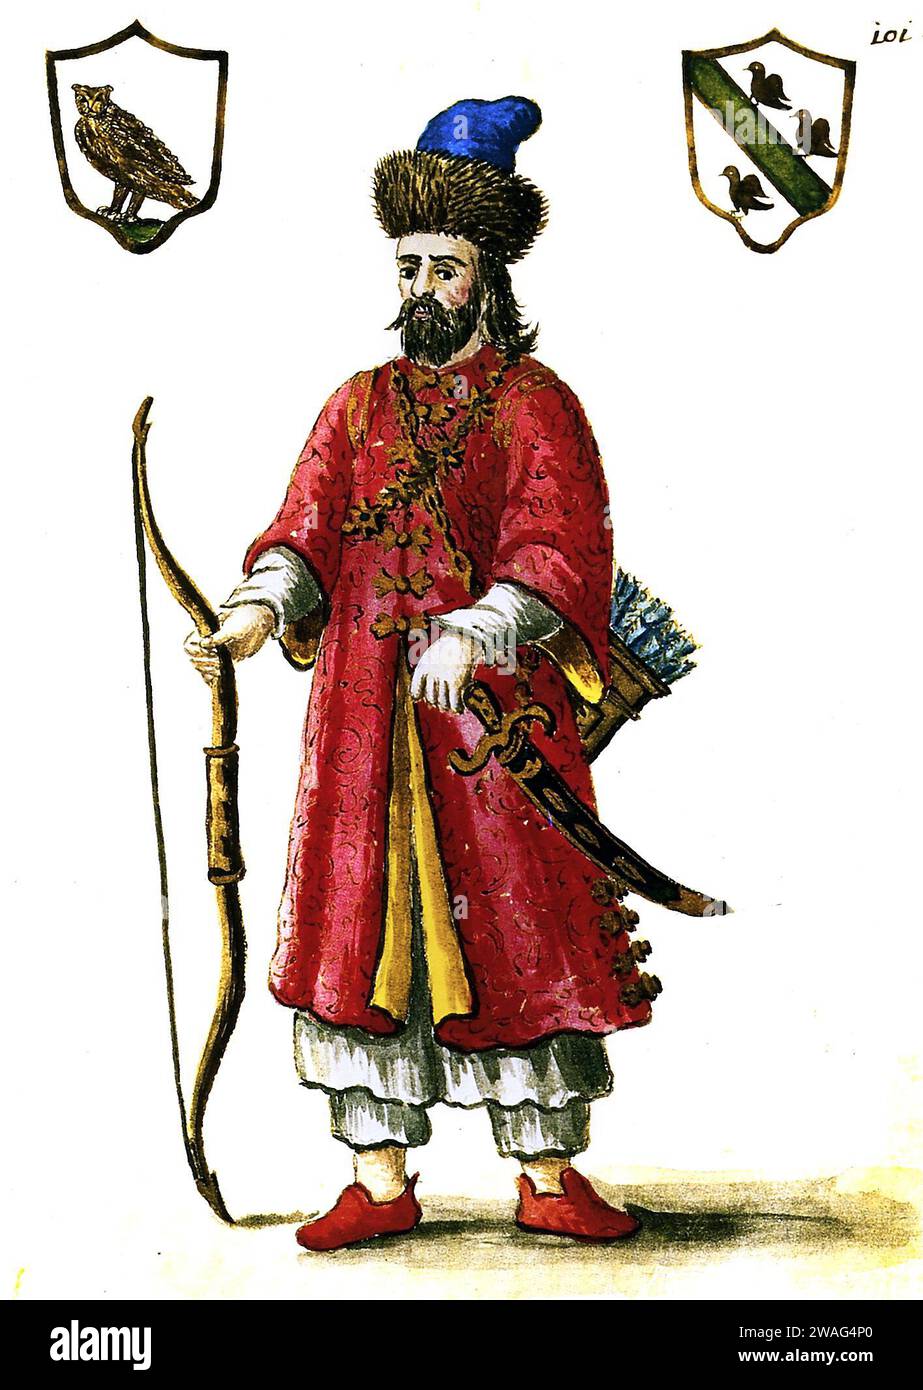 Marco Polo. Portrait of the Venetian merchant and explorer, Marco Polo (c. 1254-1324), 18th century illustration in Tartar uniform Stock Photo